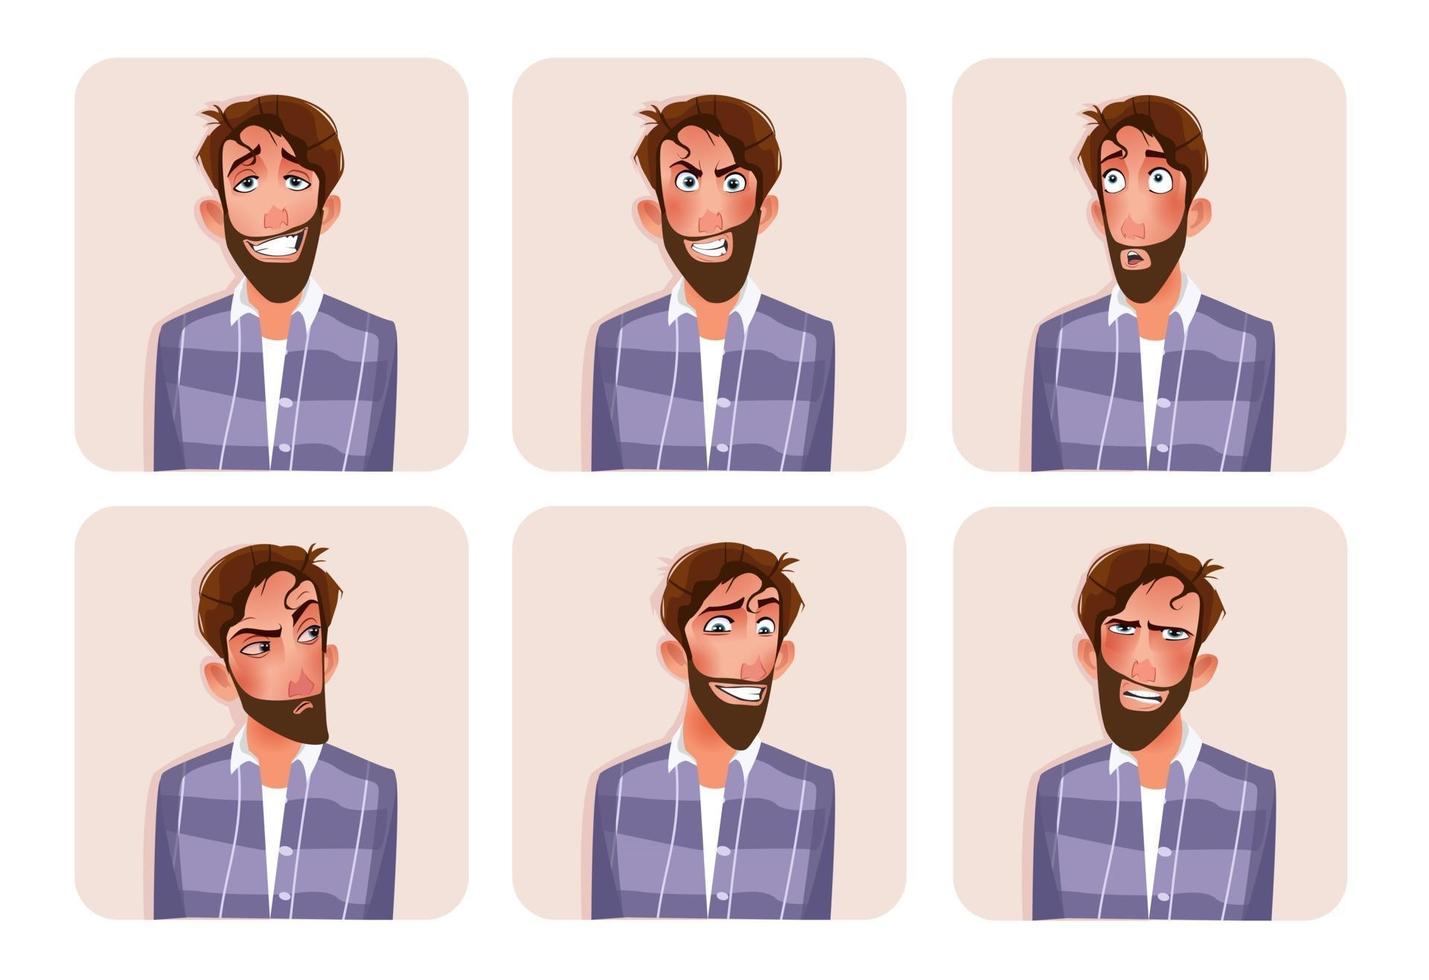 grote reeks mannelijke emoticons man avatars tonen verschillende emoties gelukkig glimlach verdrietig boos liefde verrast boos lach gezichtsuitdrukkingen cartoon stijl vector illustratie